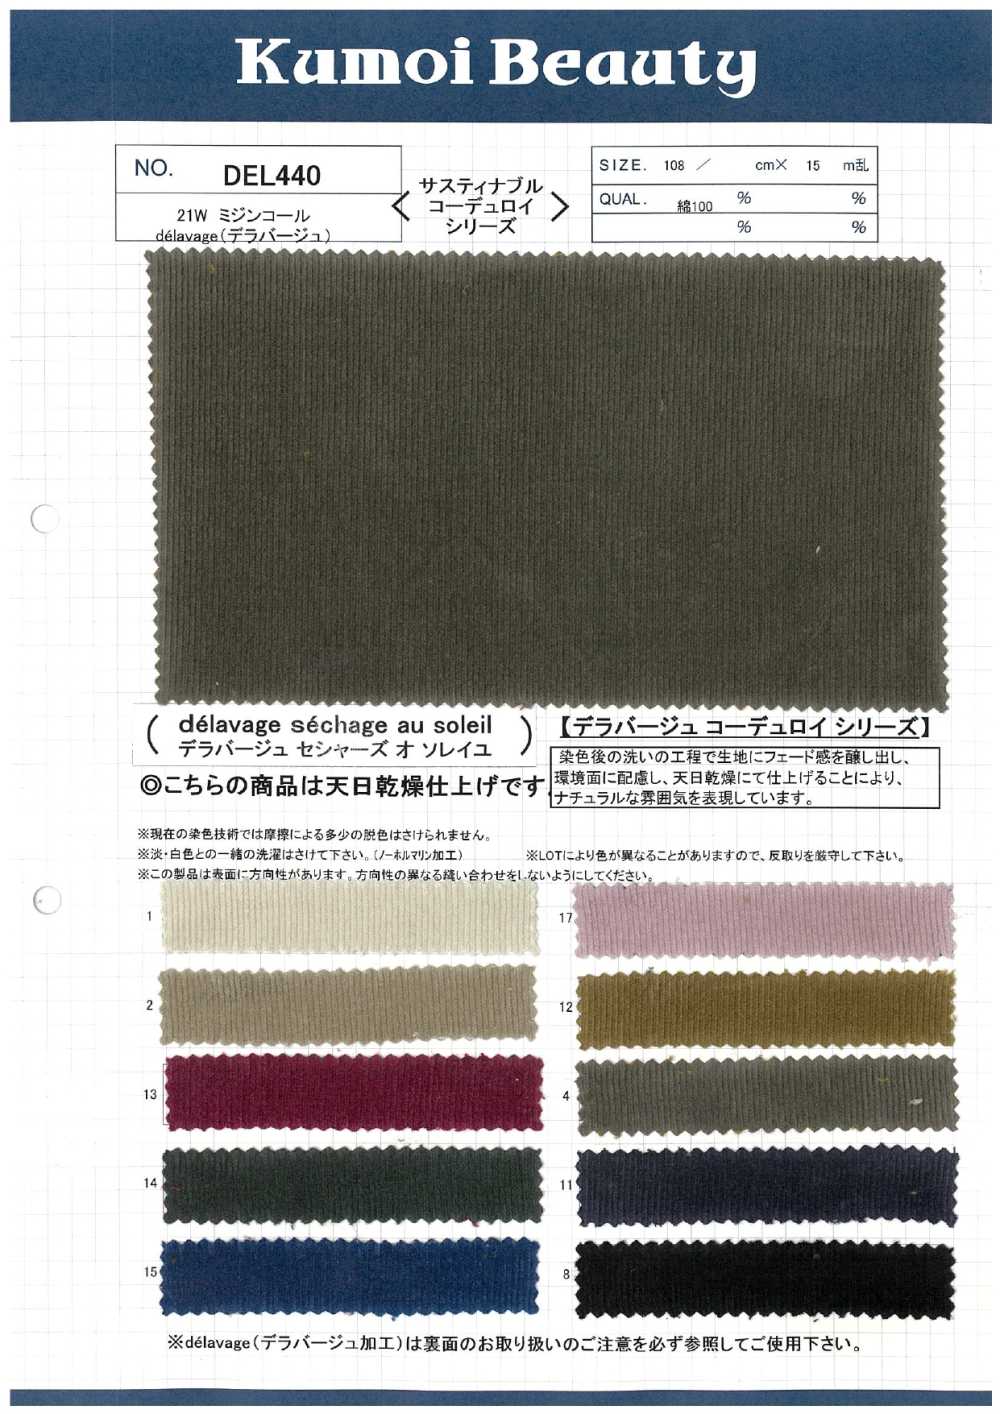 DEL440 21W Mijinkoru Heaven Delavage (Sun-dried)[Textile / Fabric] Kumoi Beauty (Chubu Velveteen Corduroy)